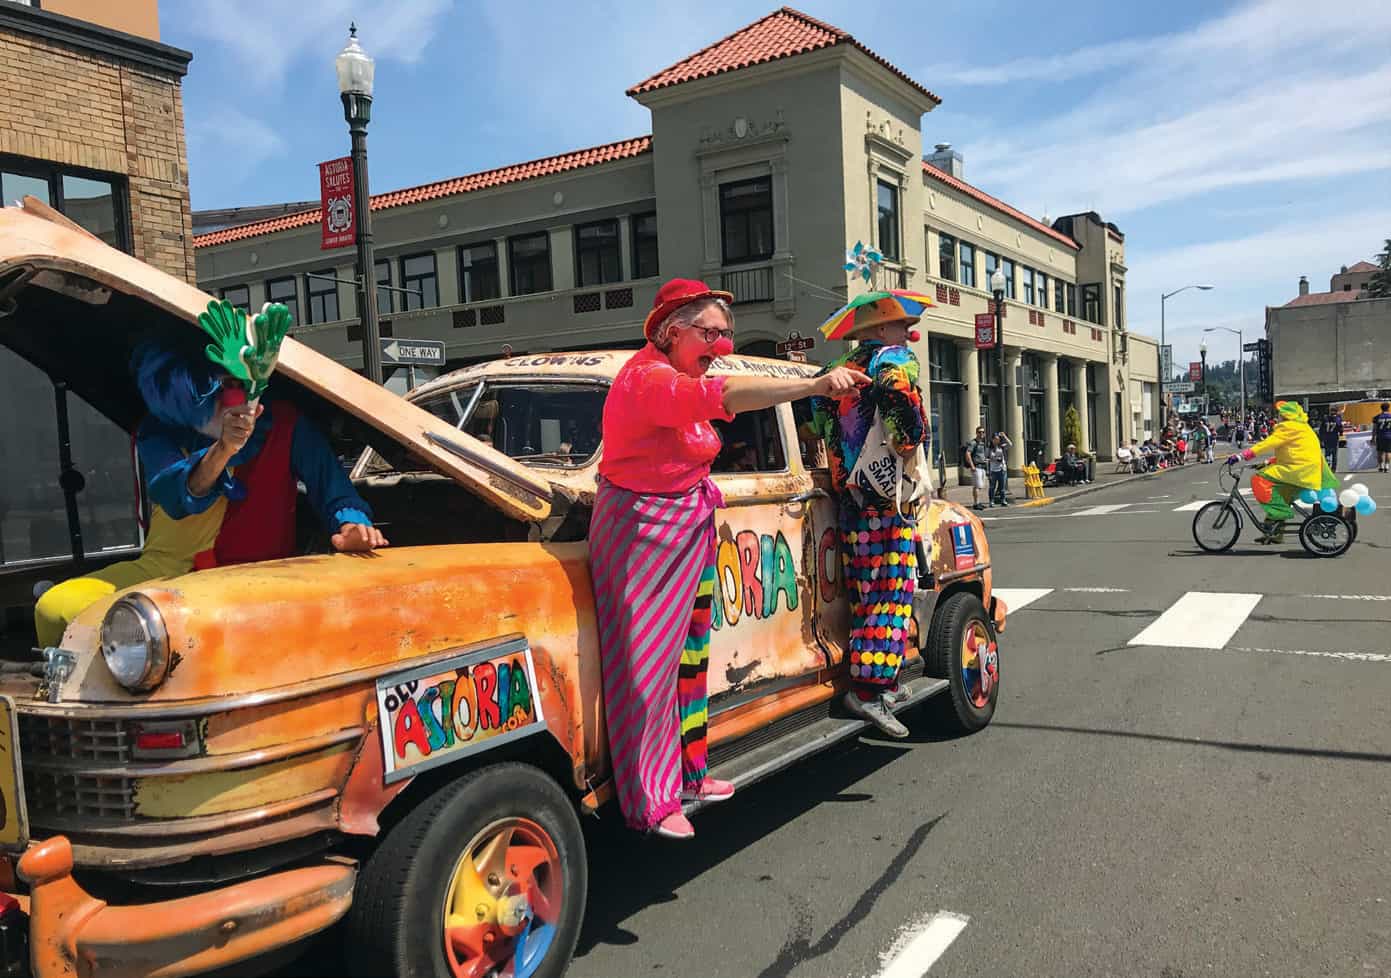 Old Astoria clown car